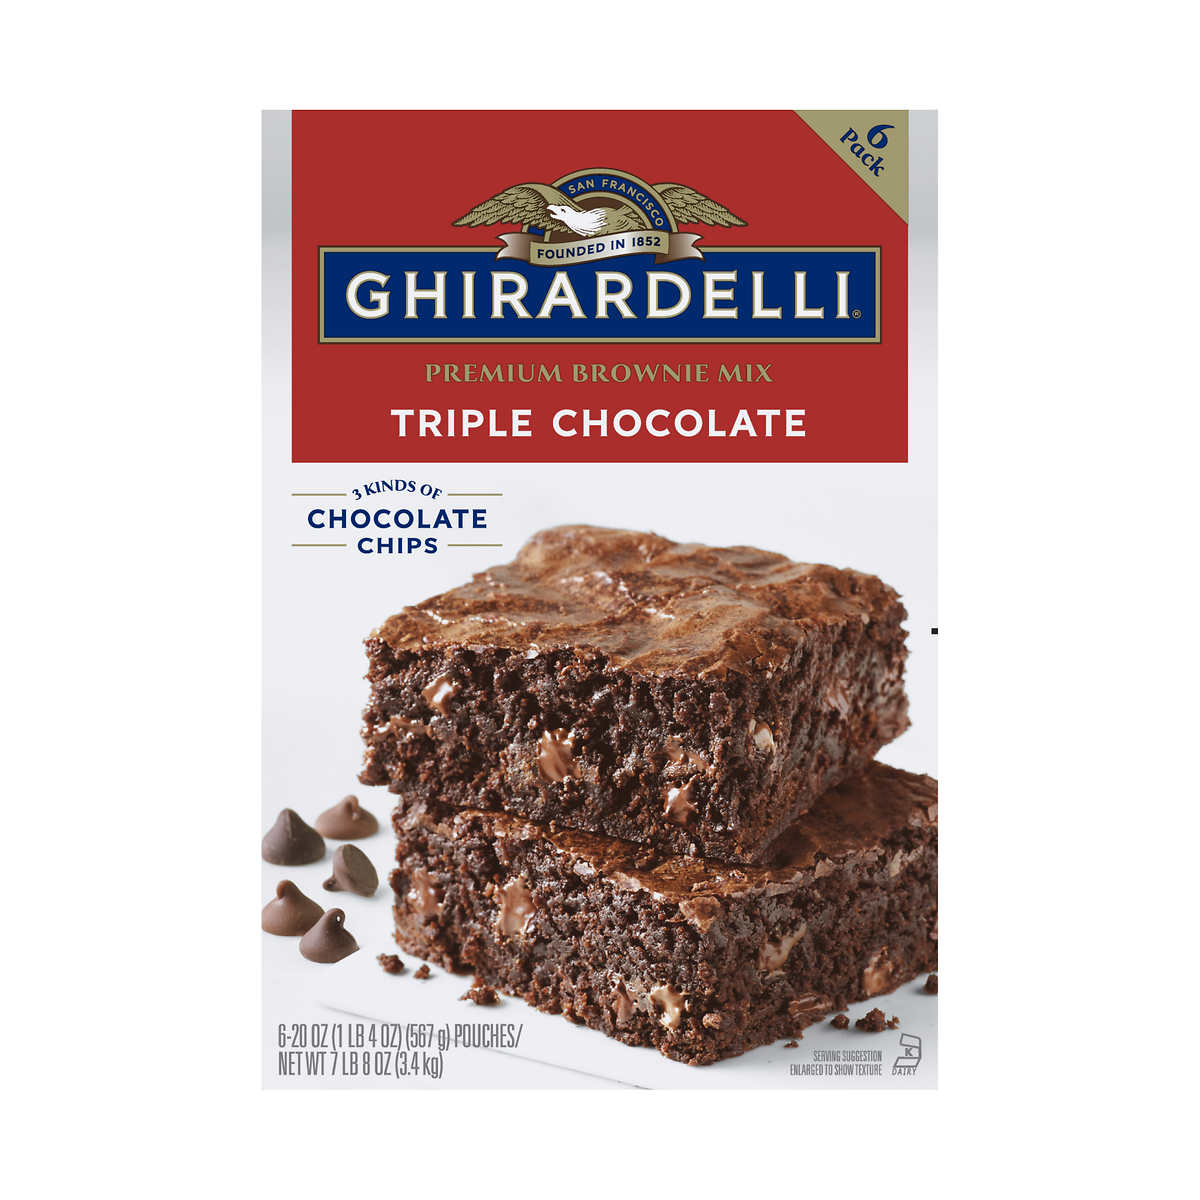 Ghirardelli Triple Chocolate Premium Brownie Mix, 6 Count